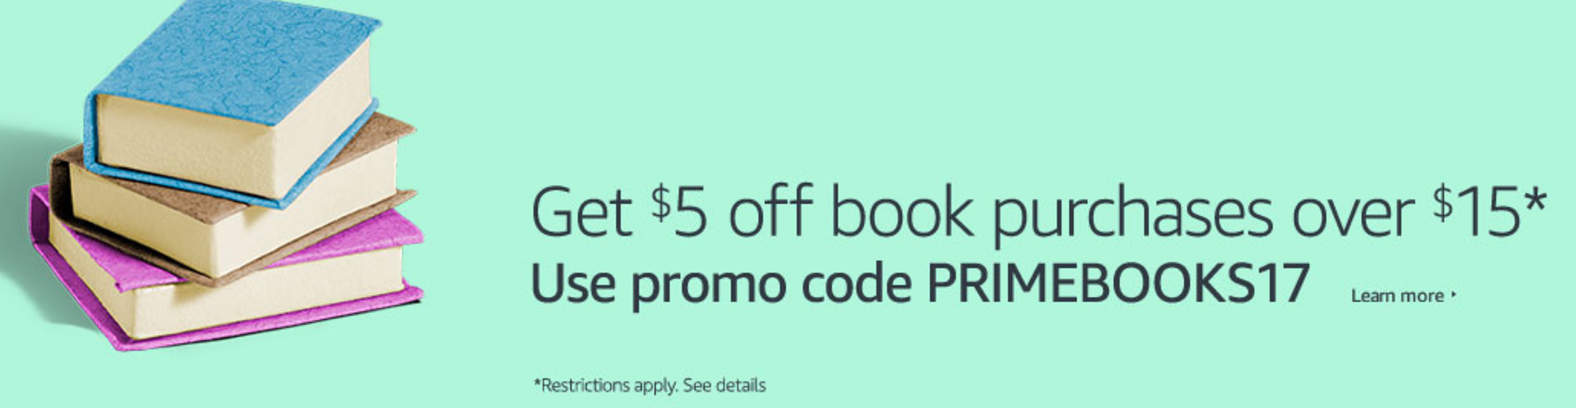 Amazon Prime Day Book Deal